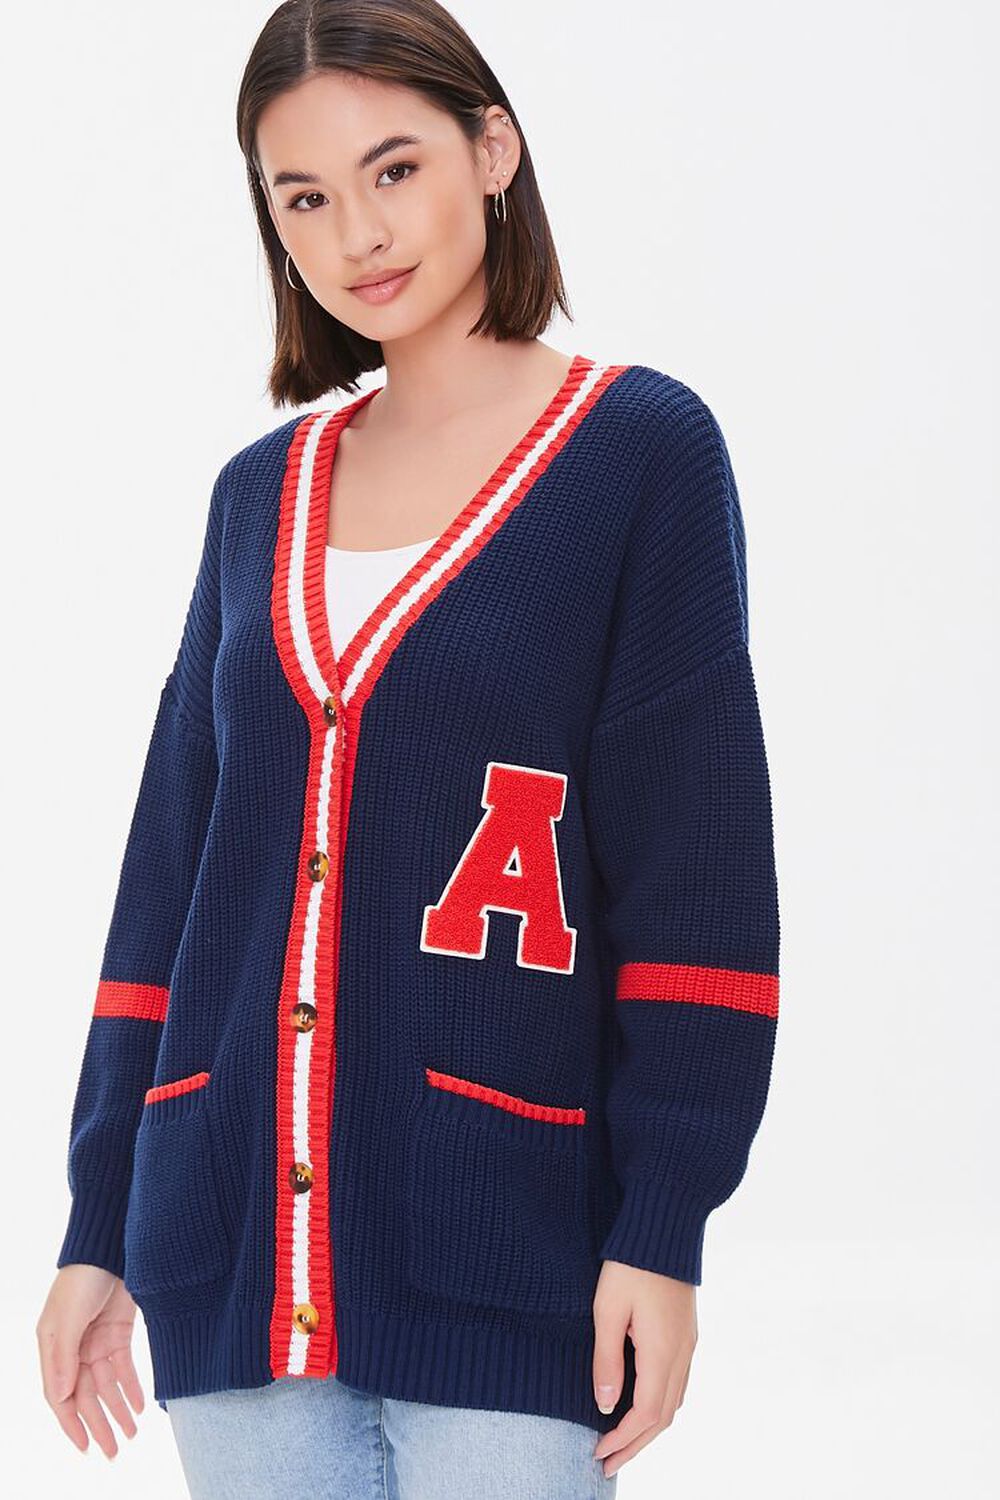 NAVY/RED Varsity-Striped Cardigan Sweater, image 1